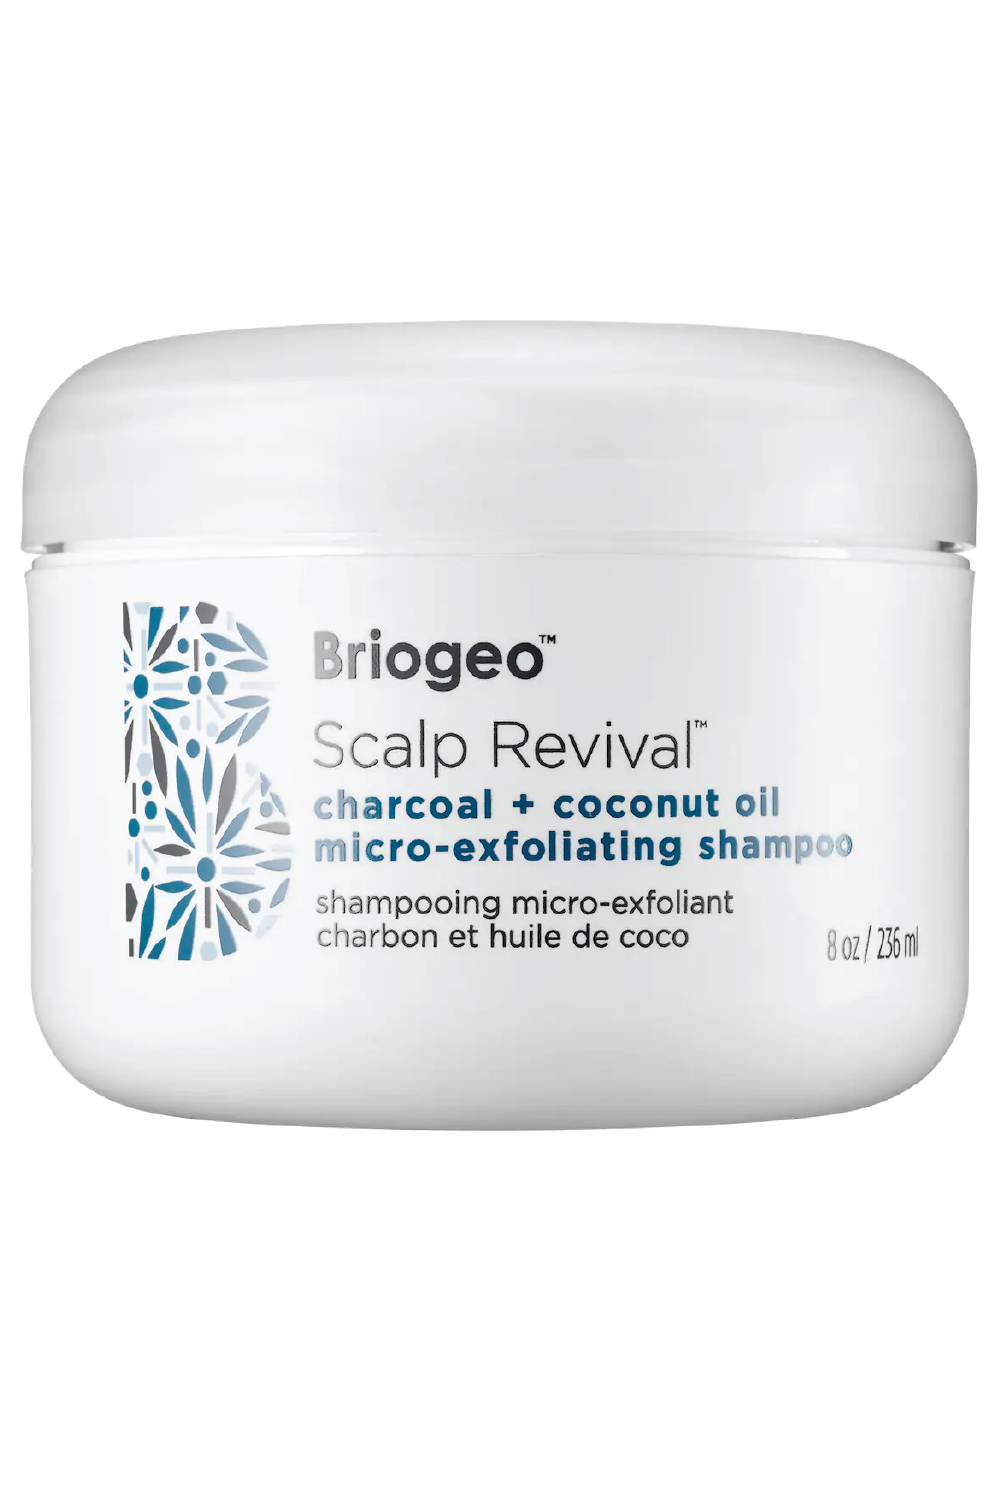 Briogeo Scalp Revival Charcoal + Coconut Oil Micro-Exfoliating Scalp Scrub Shampoo